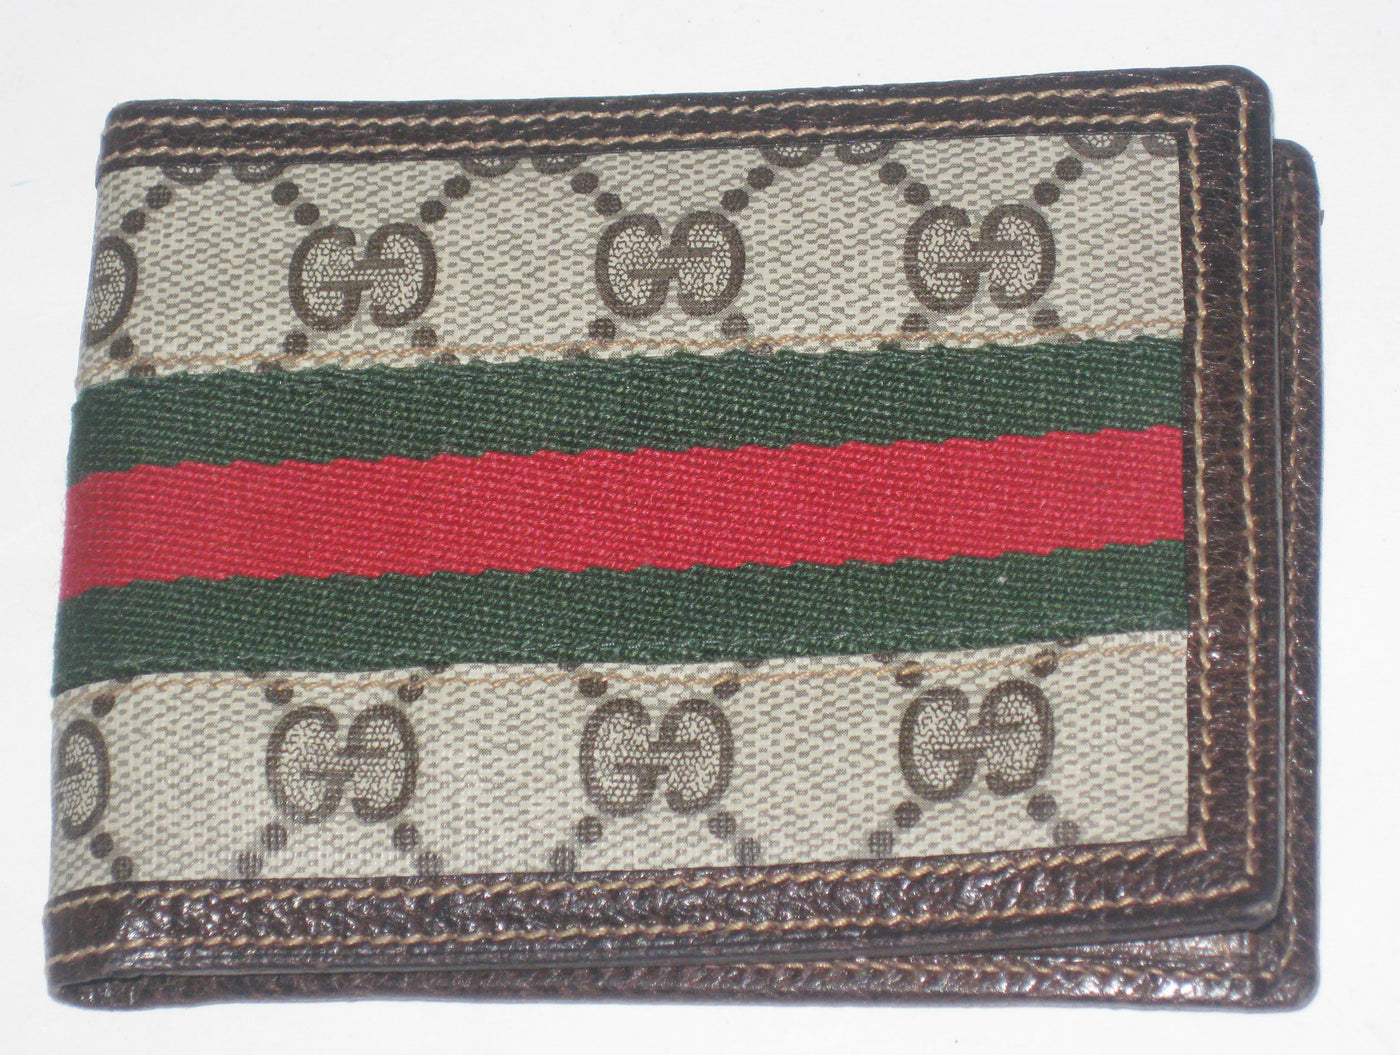 Vintage Gucci Monogram Billfold Wallet